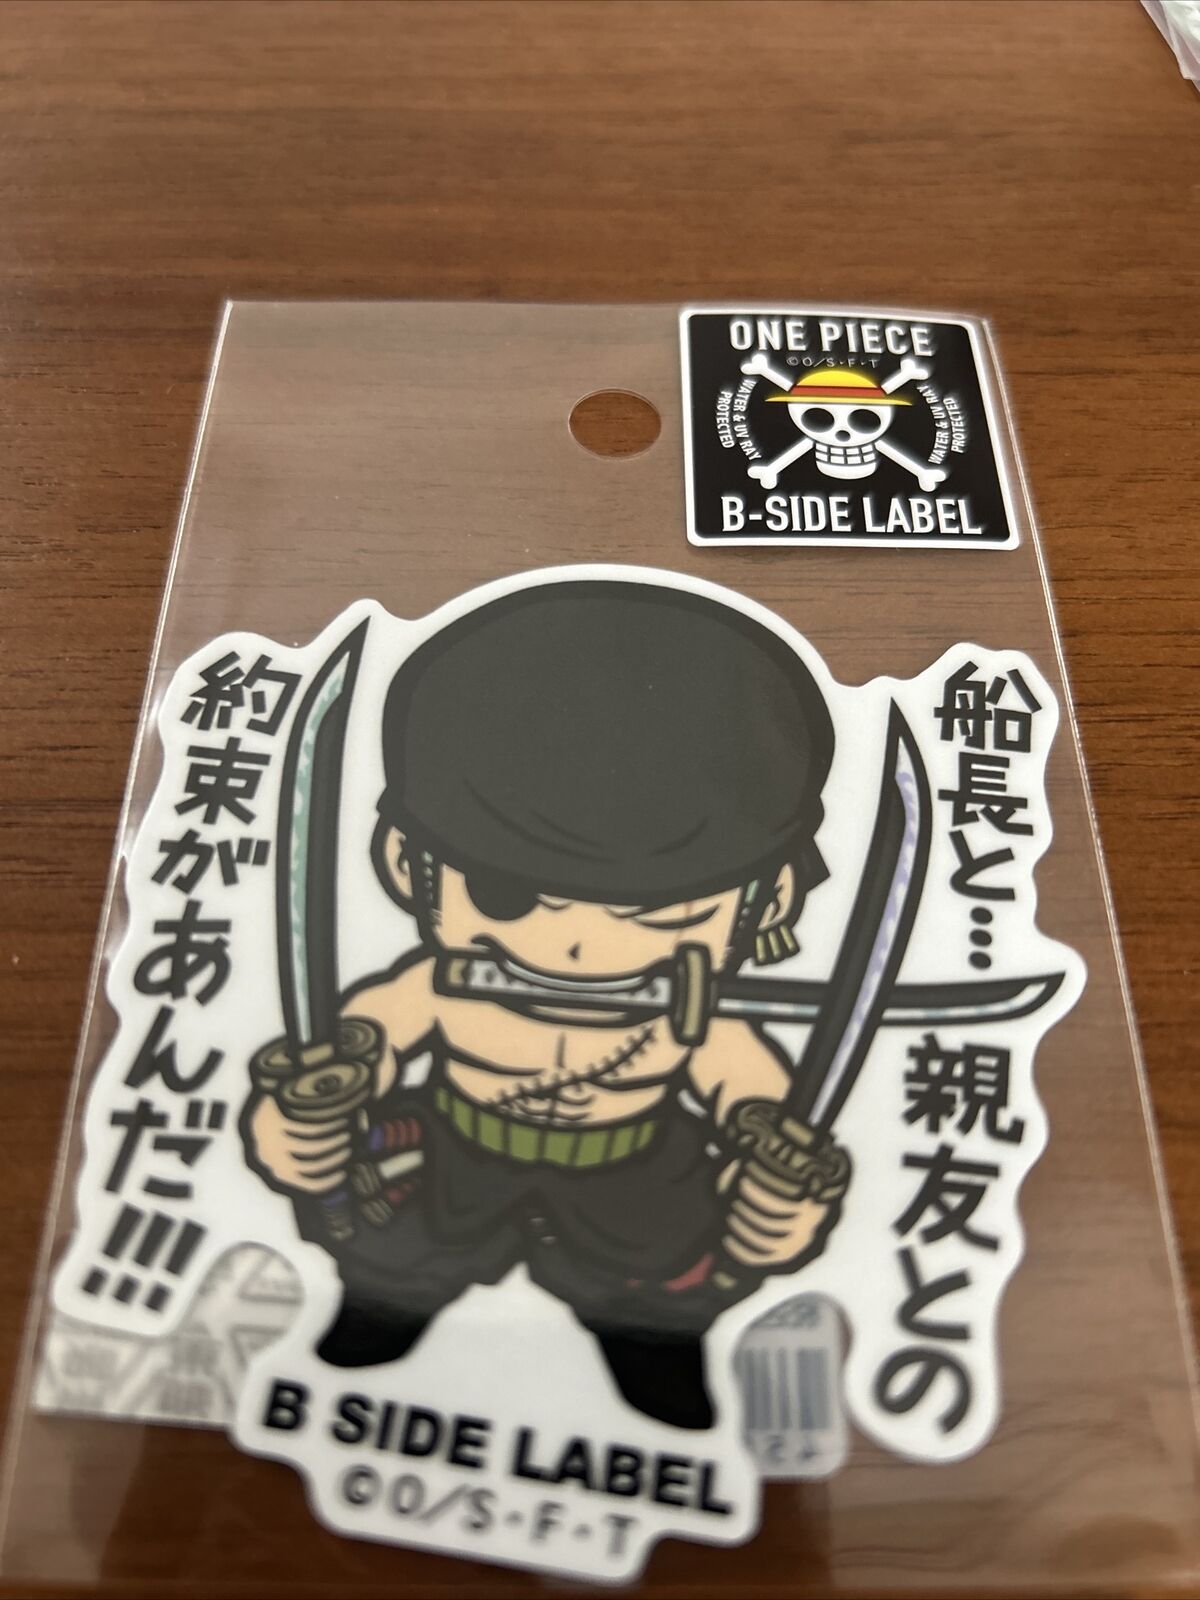 One Piece Roronoa Zoro  B-SIDE LABEL Japan import NEW sticker 🔥